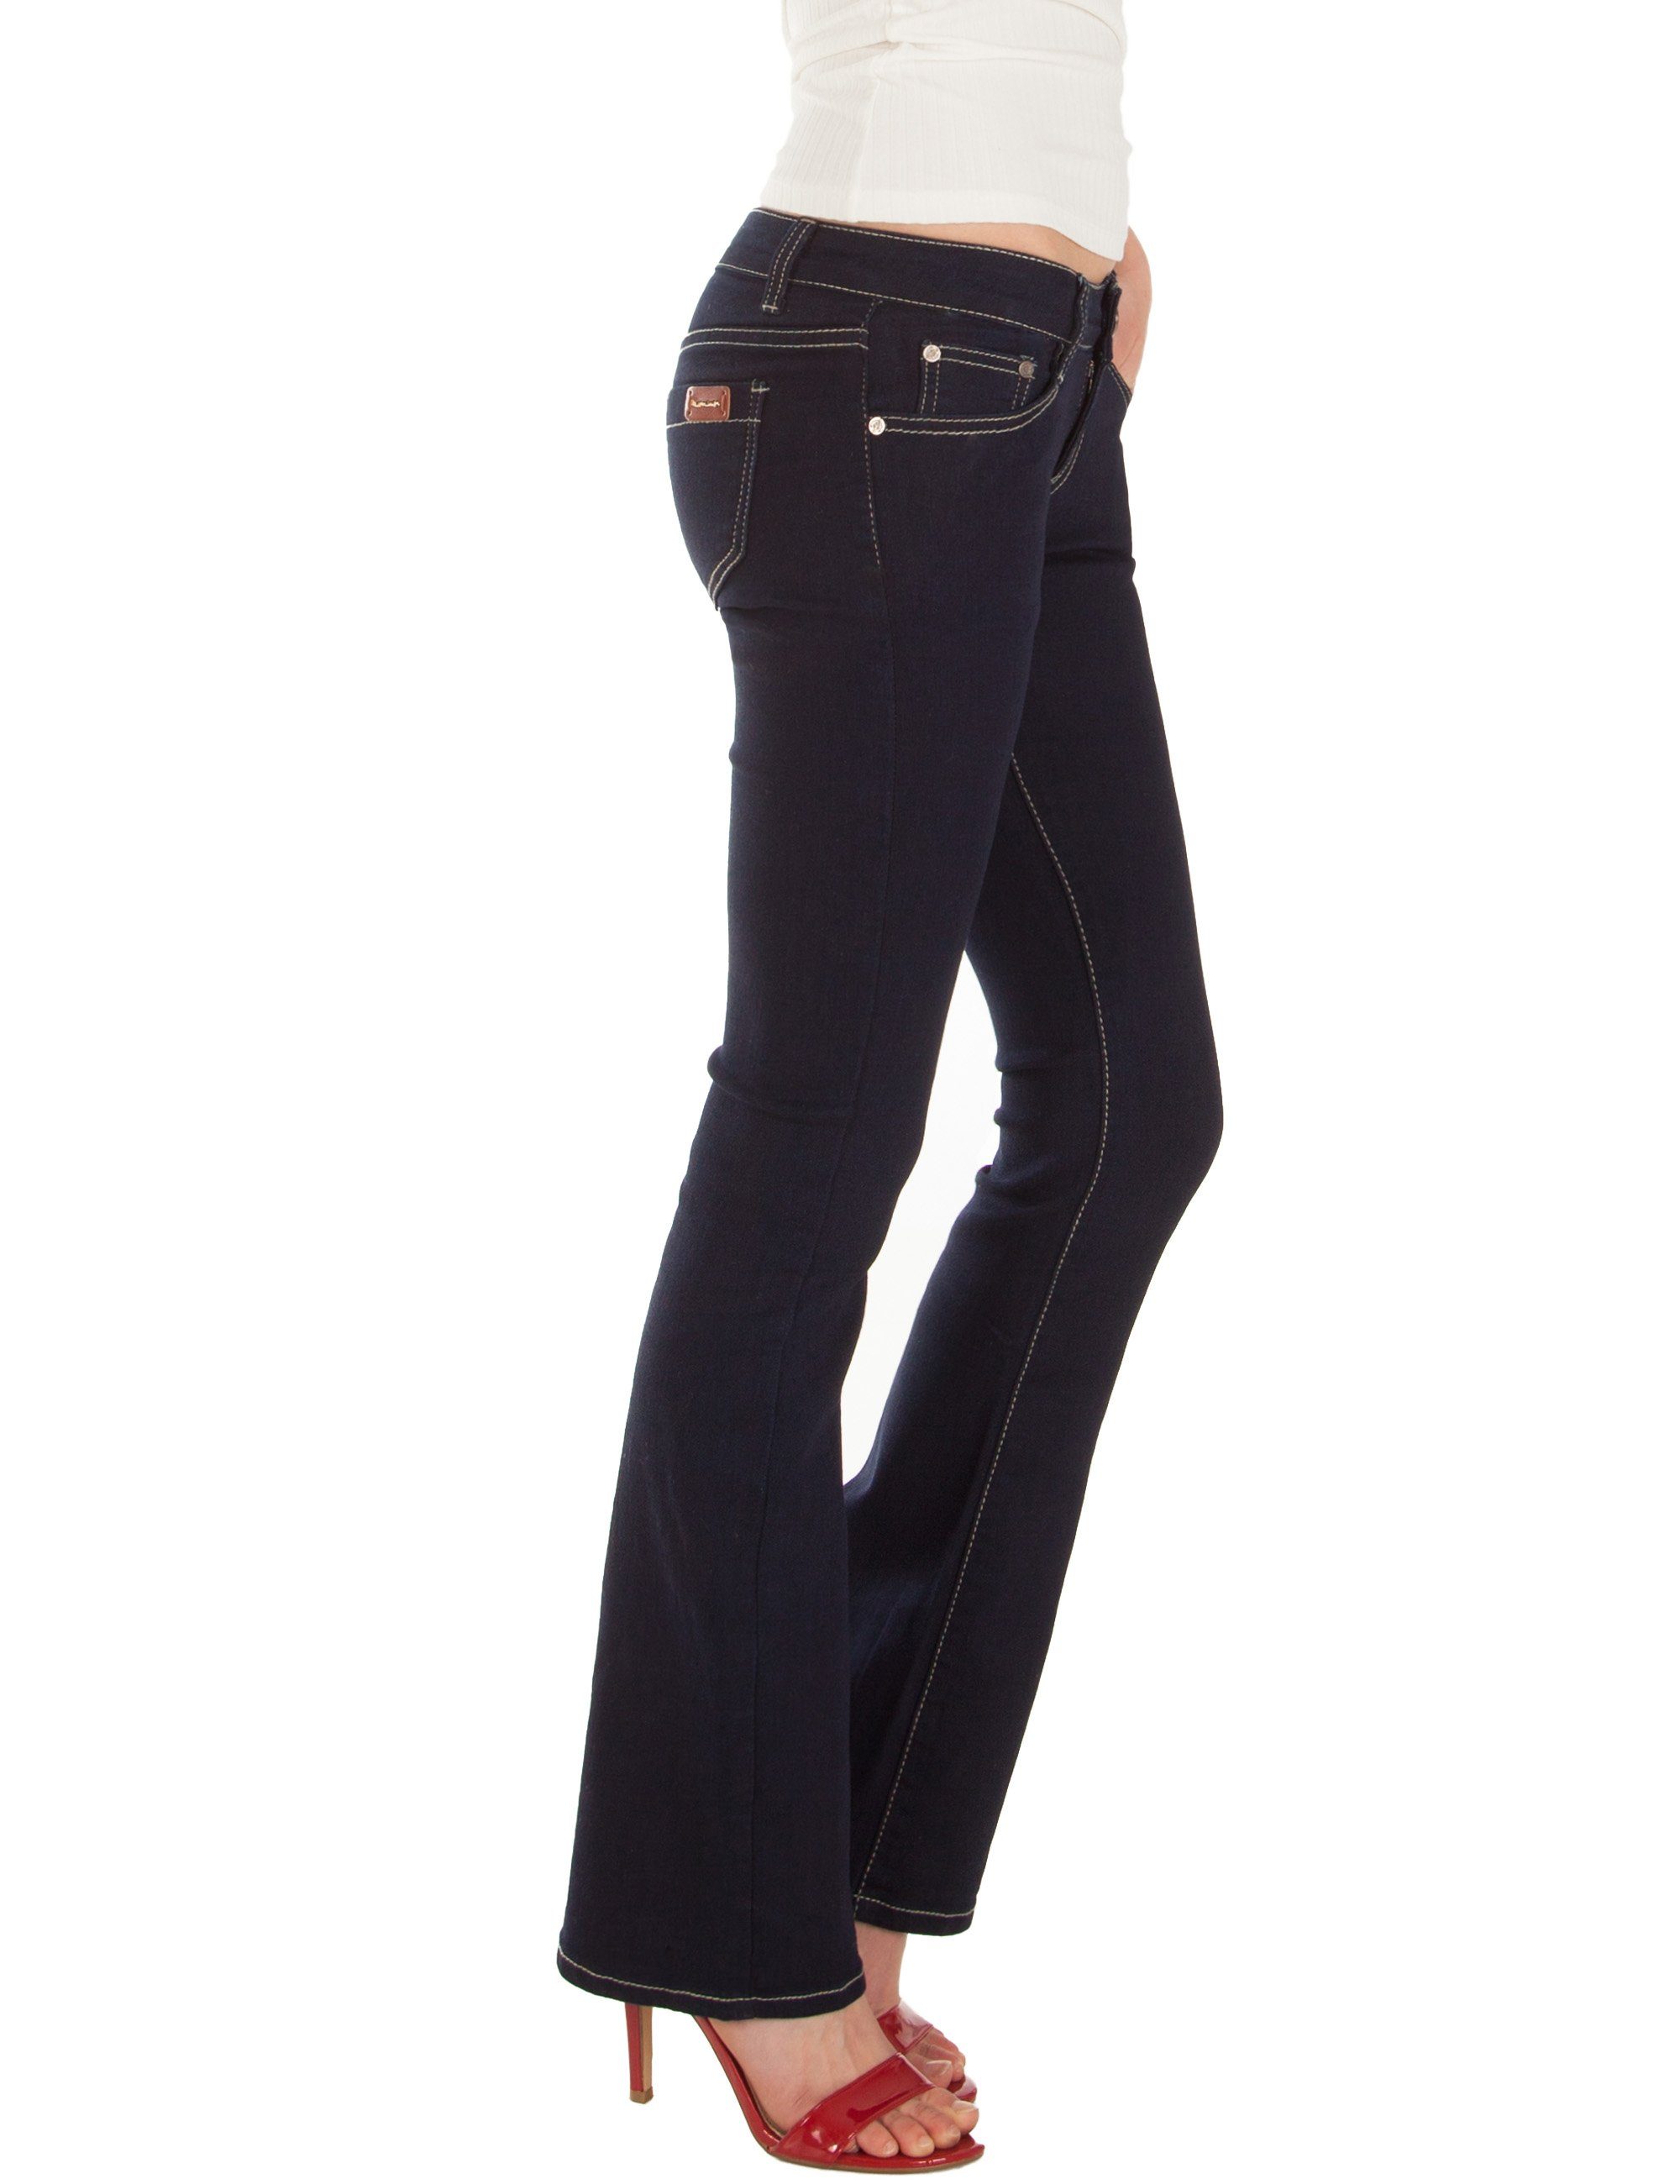 Fraternel Bootcut-Jeans Stretch, Dunkelblau 5-Pocket-Style Waist, Low